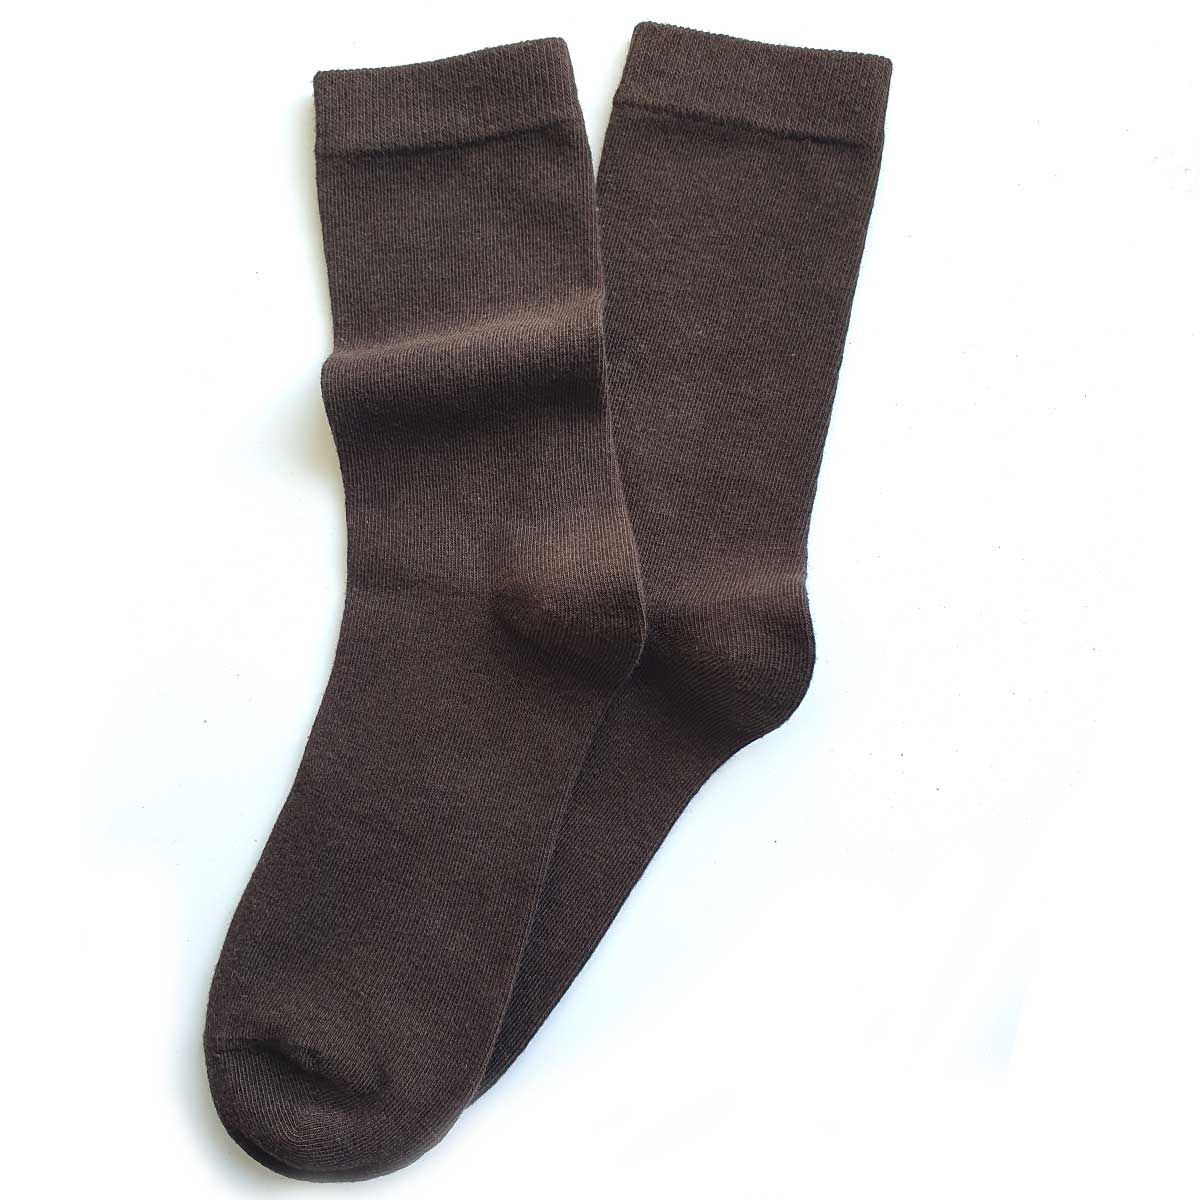 Socks in organic cotton for women